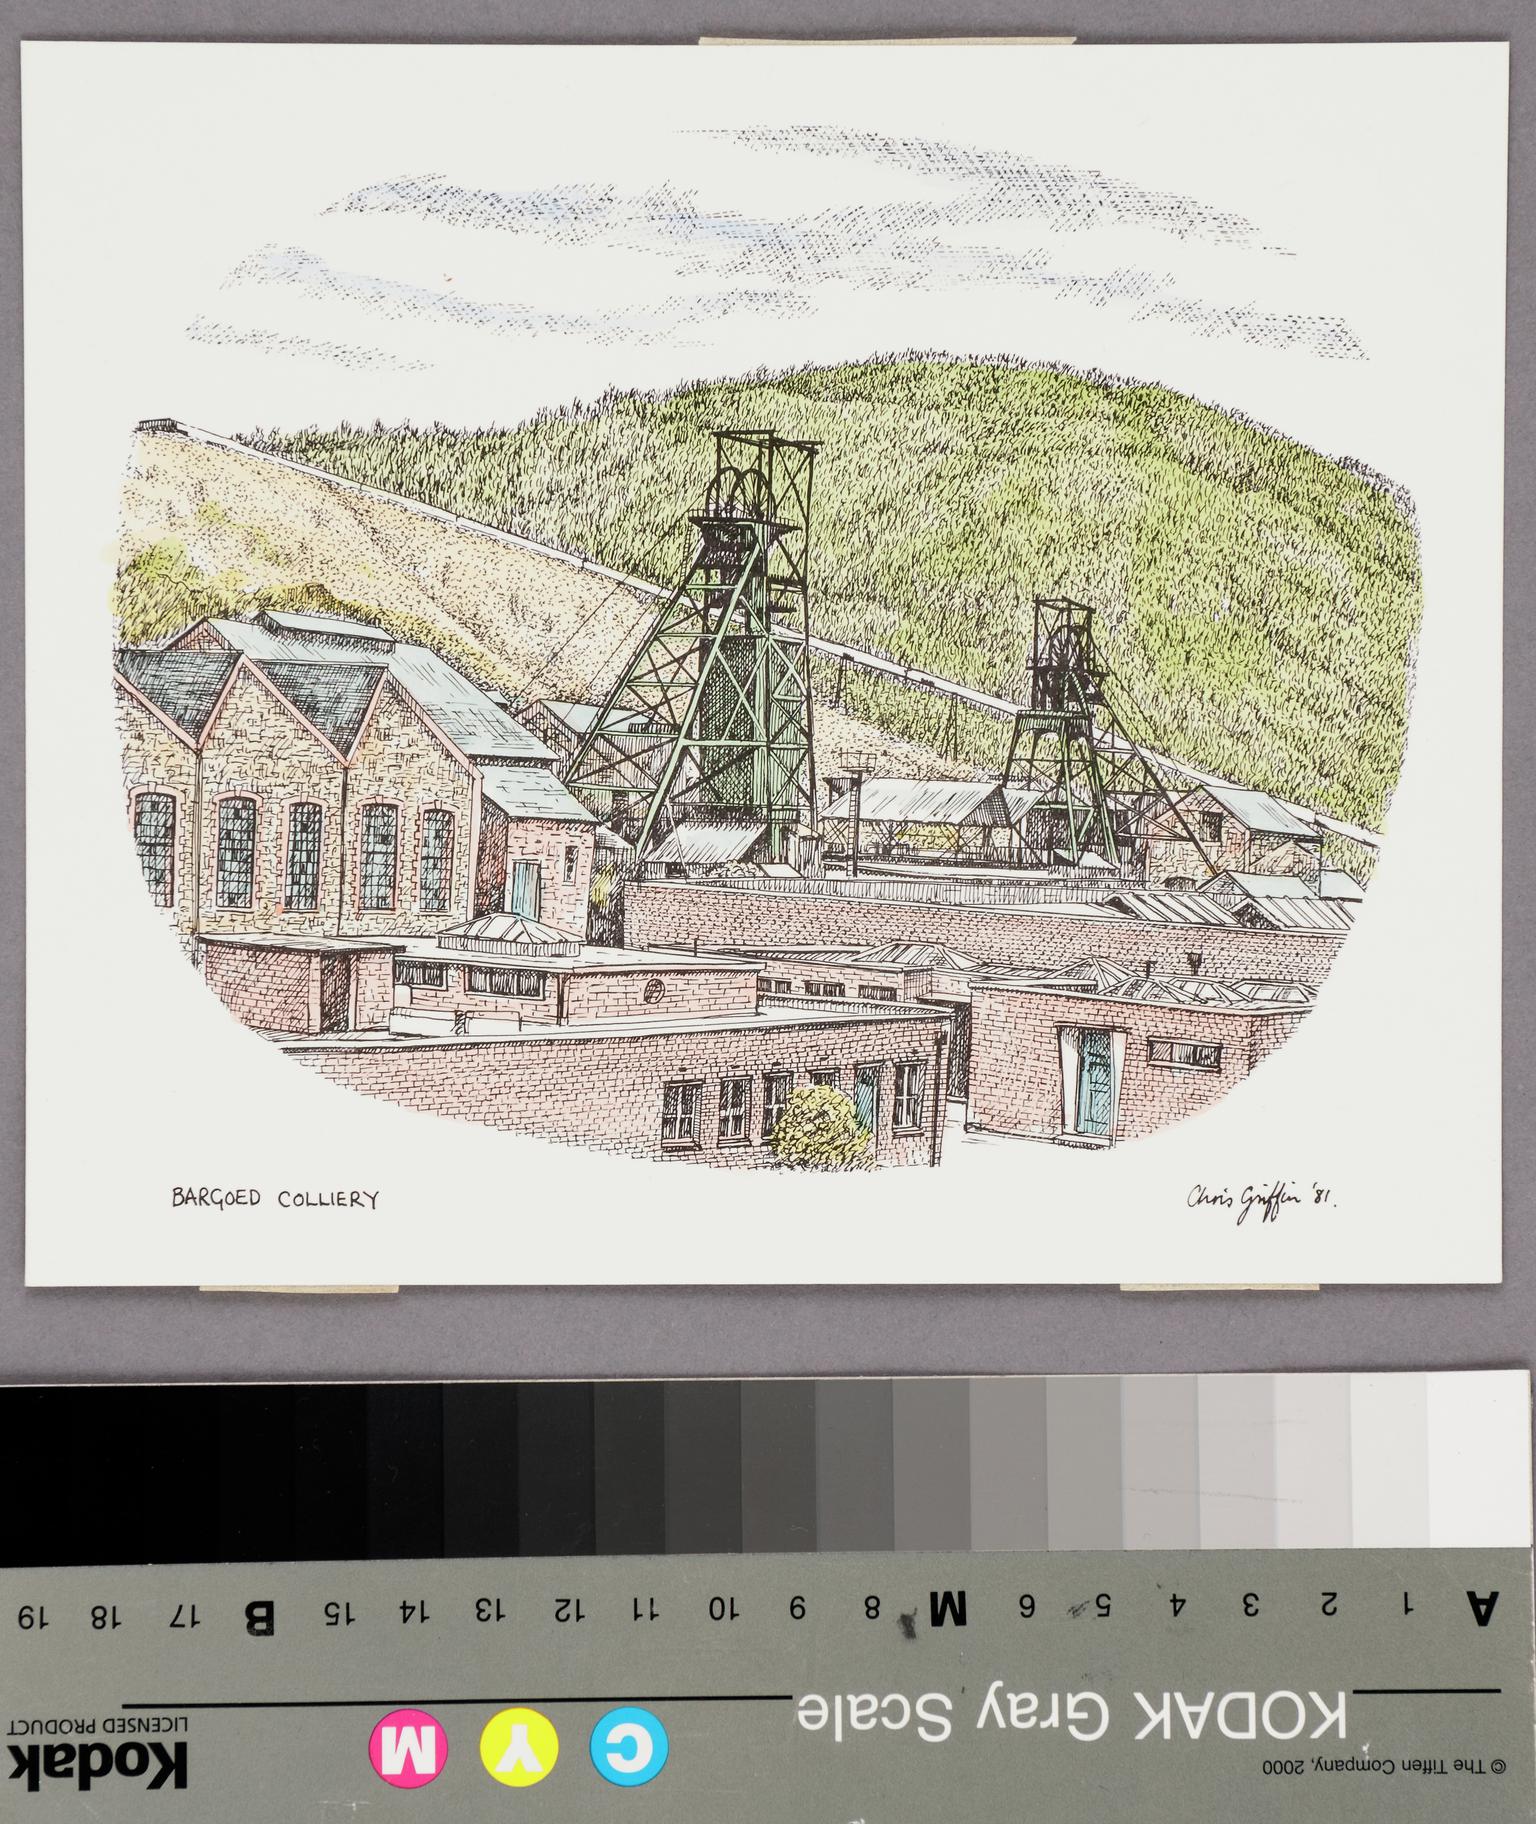 Bargoed Colliery (print)